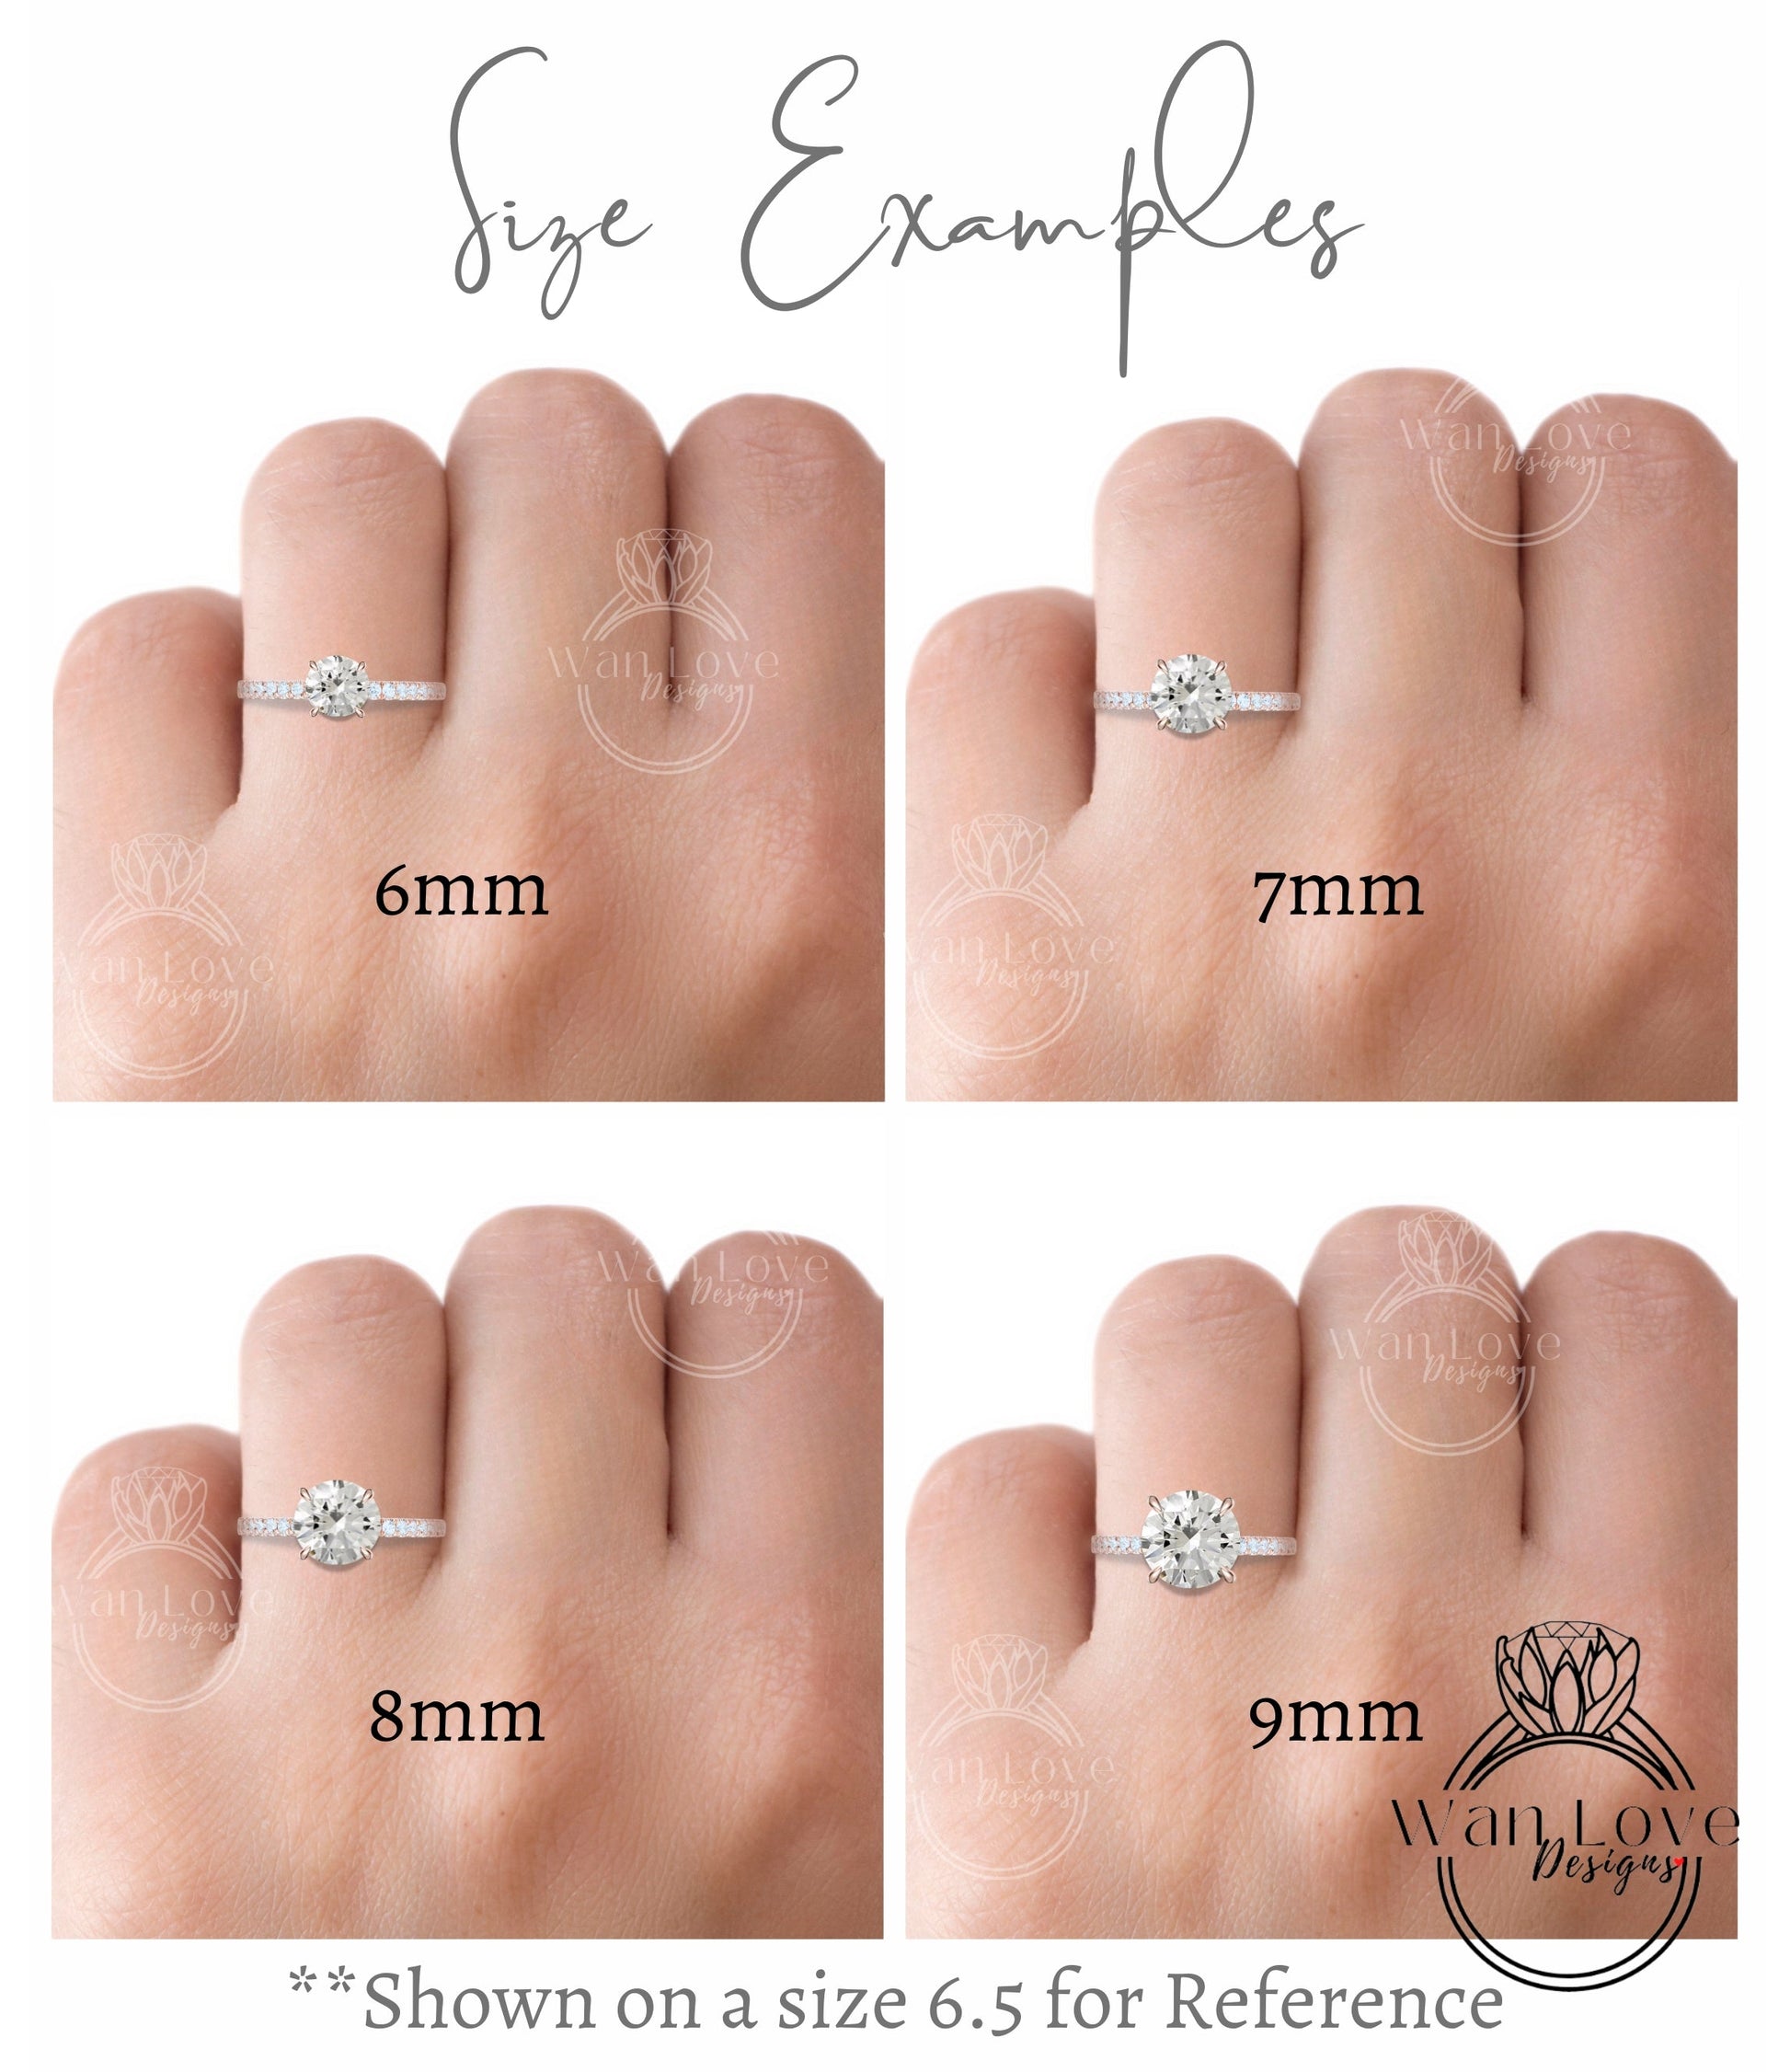 Blue Sapphire & Diamond Cluster thin dainty 3 gem stone Round Engagement Ring, Custom, 14kt 18kt Gold,Platinum, Wedding, WanLoveDesigns Wan Love Designs